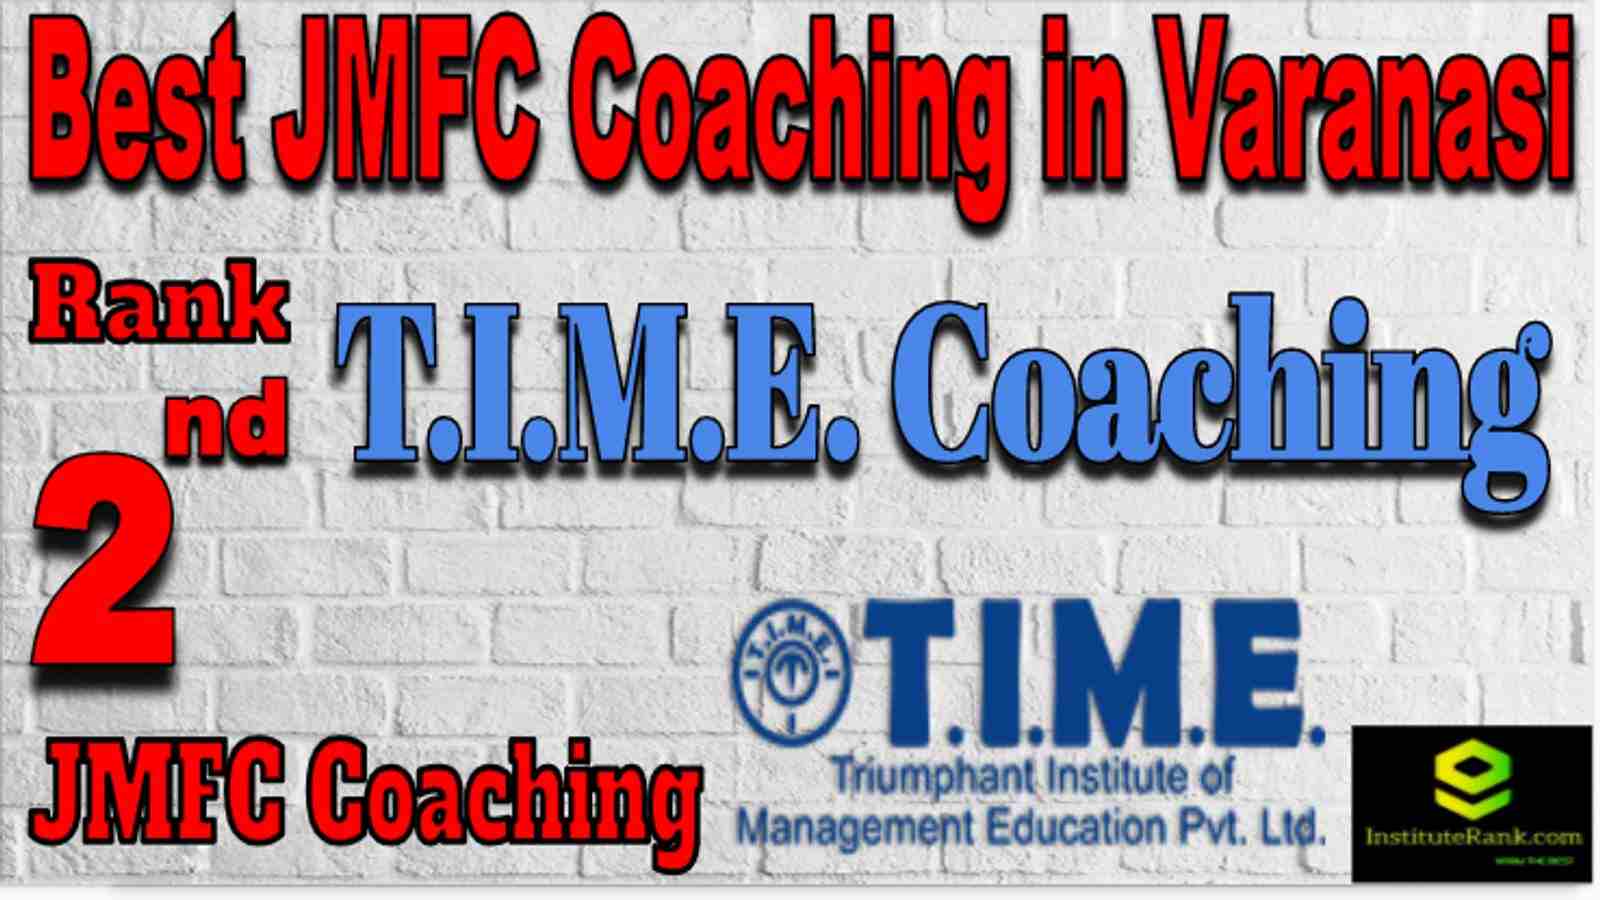 Rank 2 Best JMFC Coaching in Varanasi